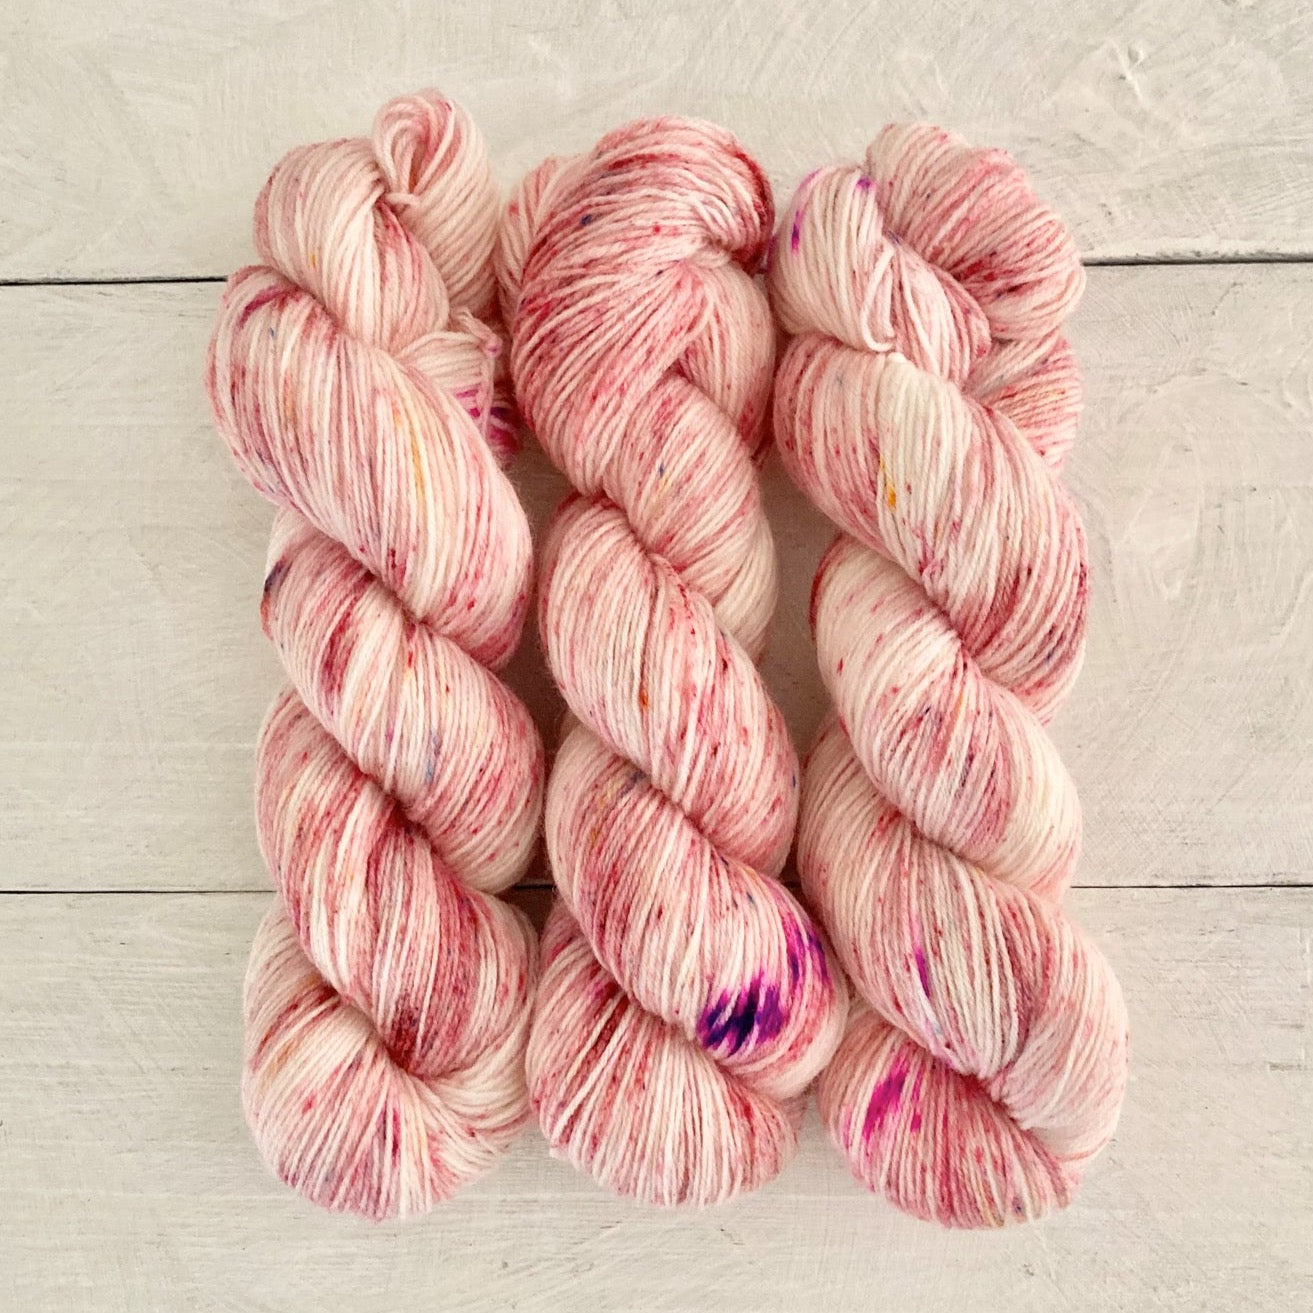 Hand-dyed yarn No.235 sock yarn "Tutti i fior" 